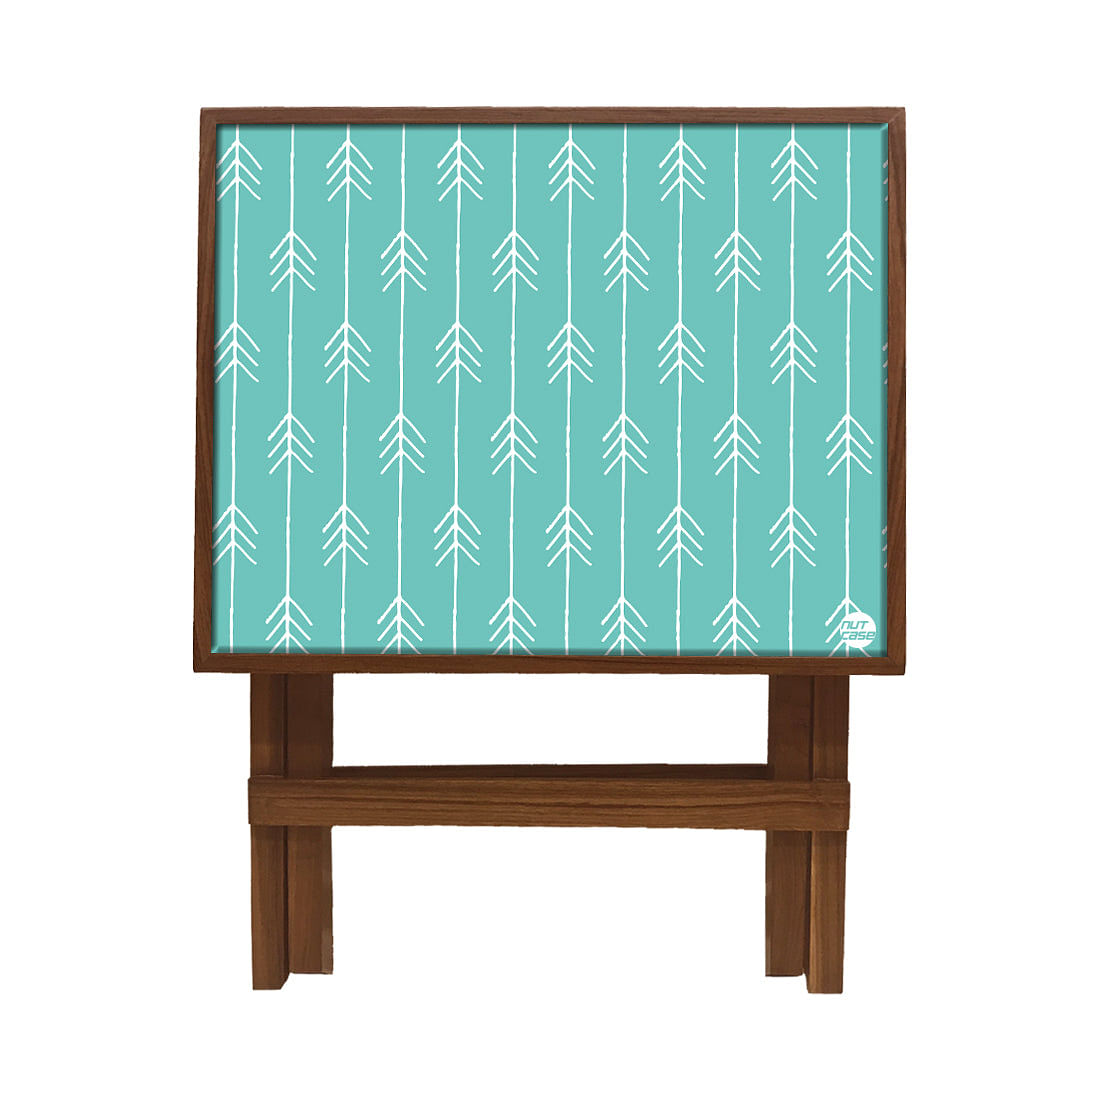 Folding Side Table - Teak Wood -Light Blue Arrow Nutcase